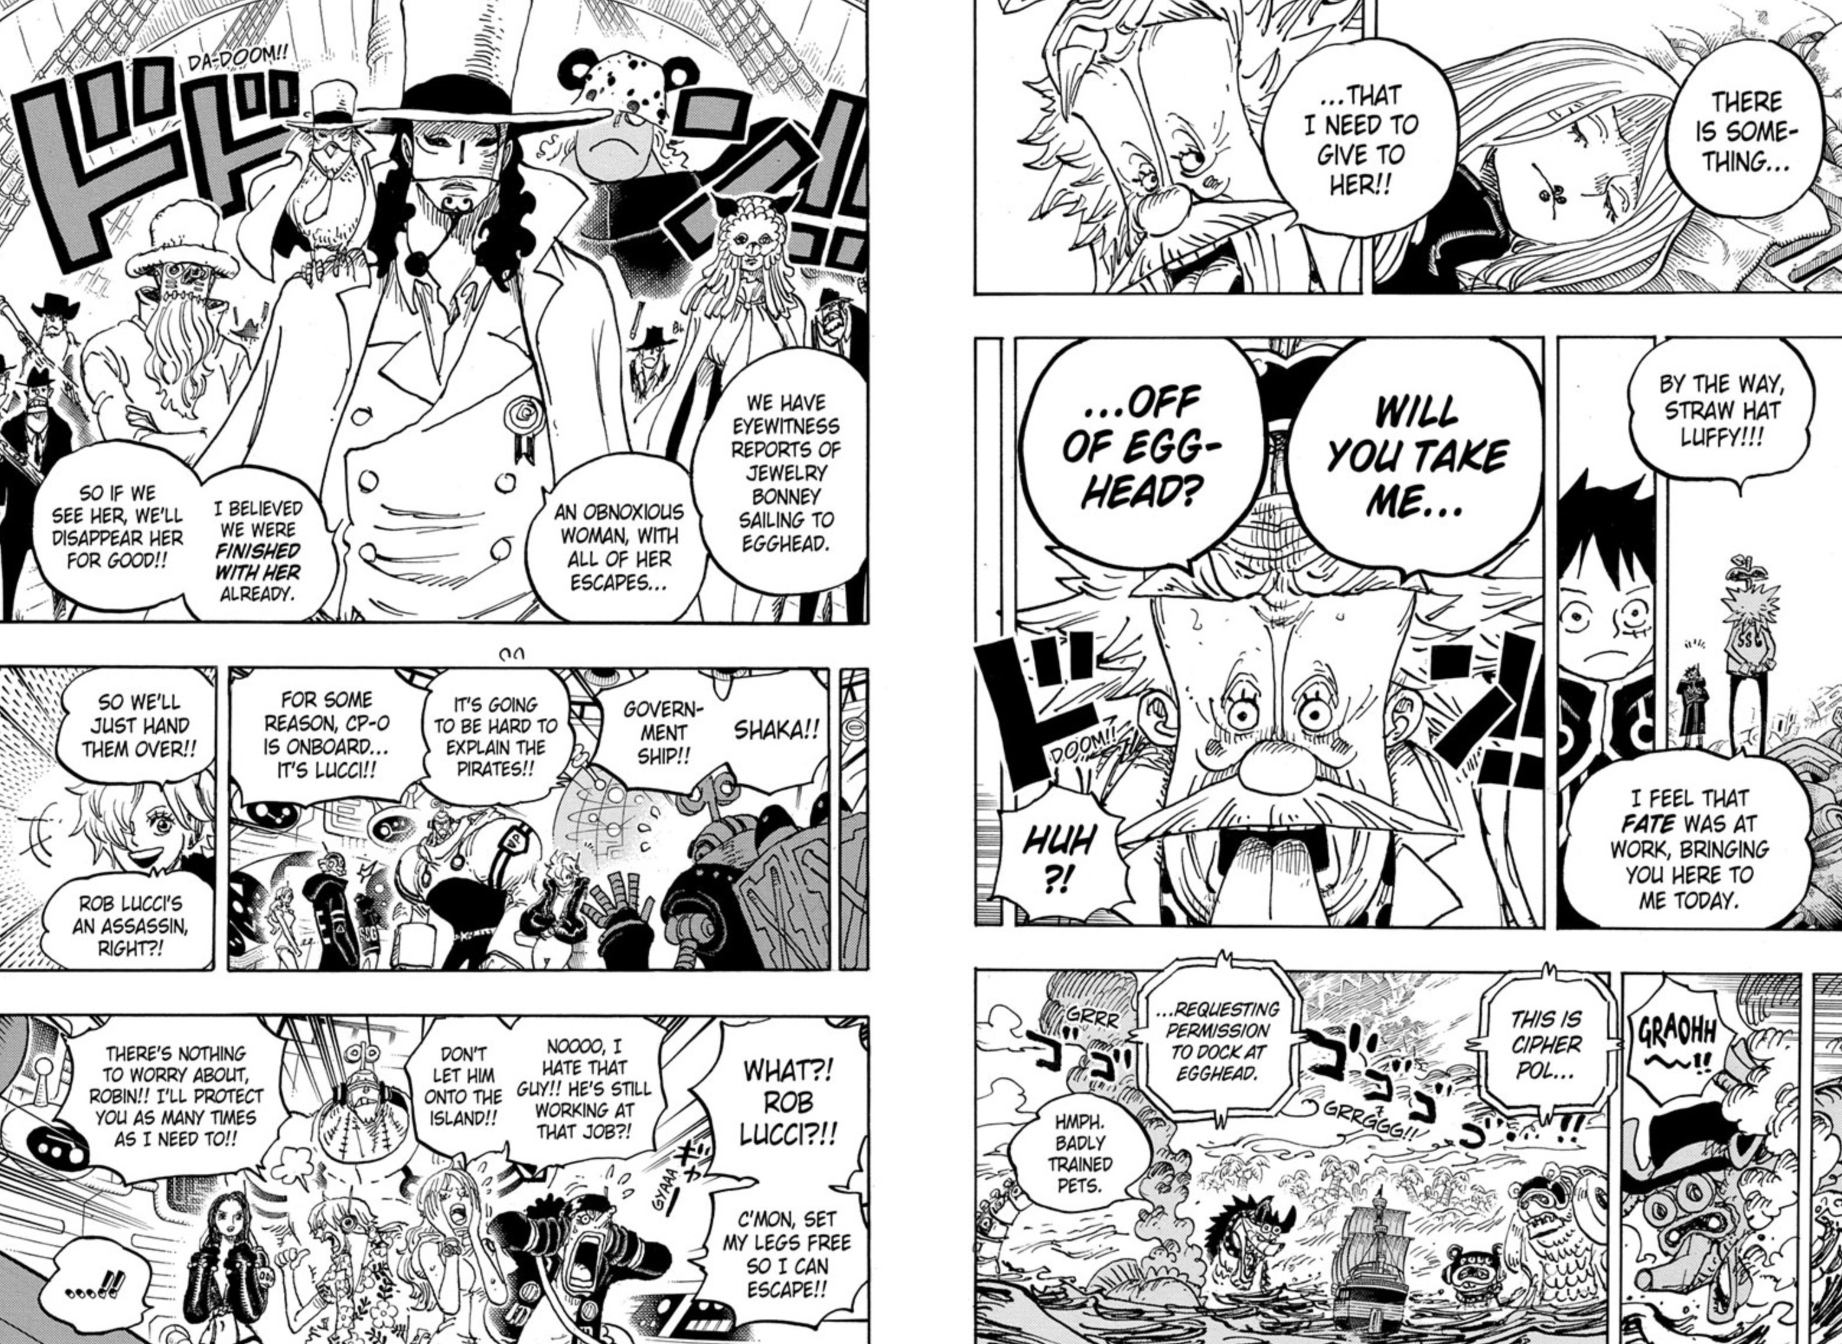 One Piece Chapitre 1067 Pages 12-13